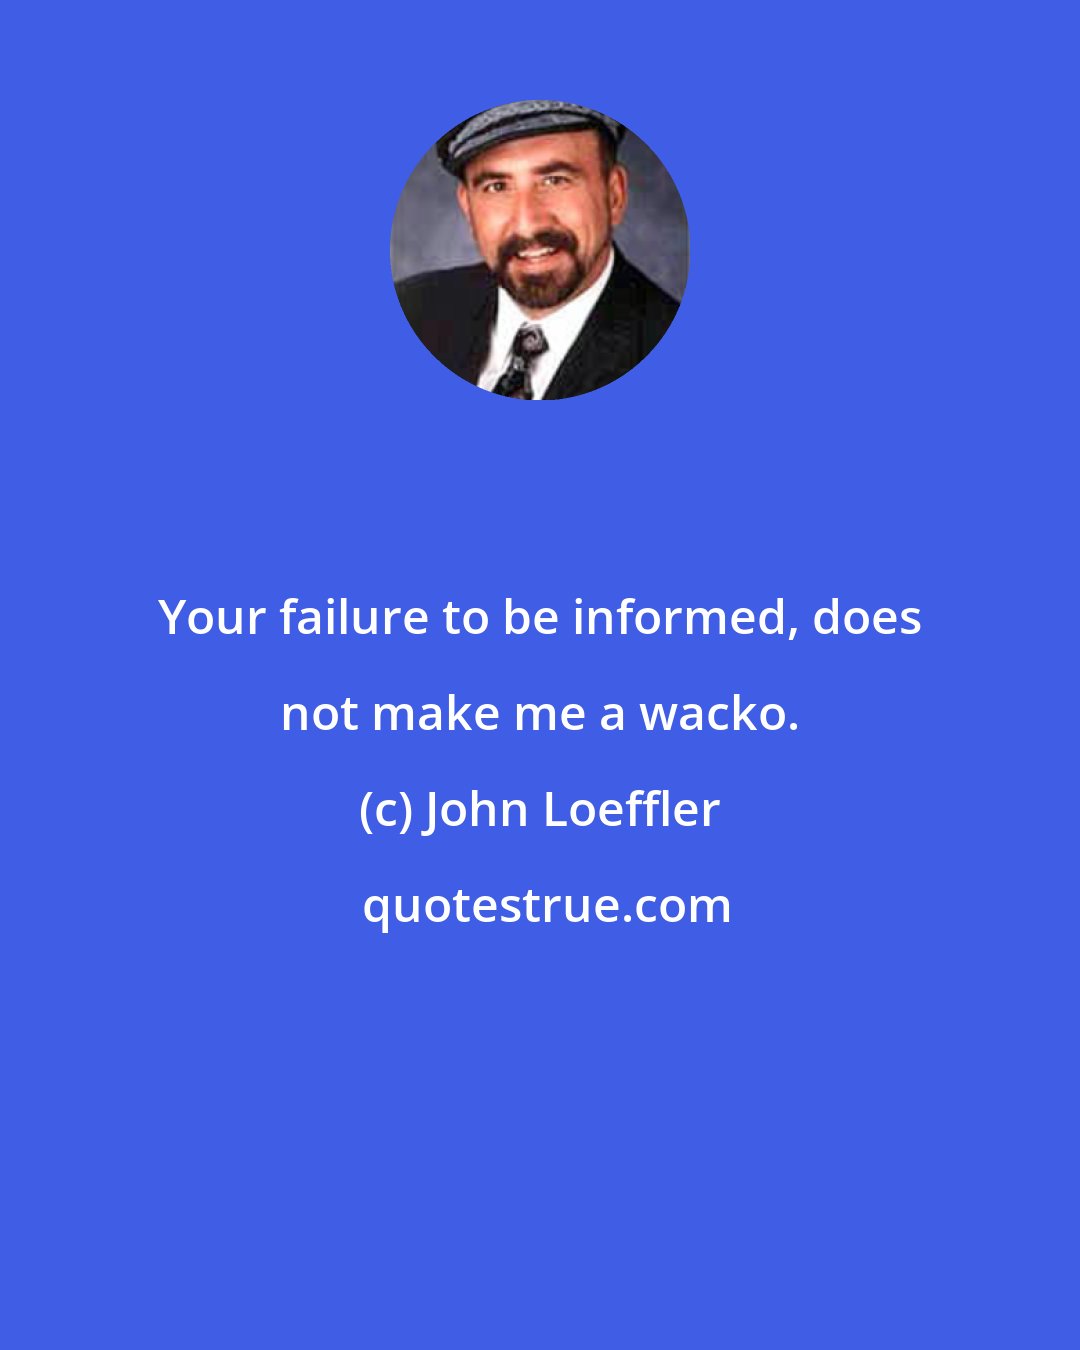 John Loeffler: Your failure to be informed, does not make me a wacko.